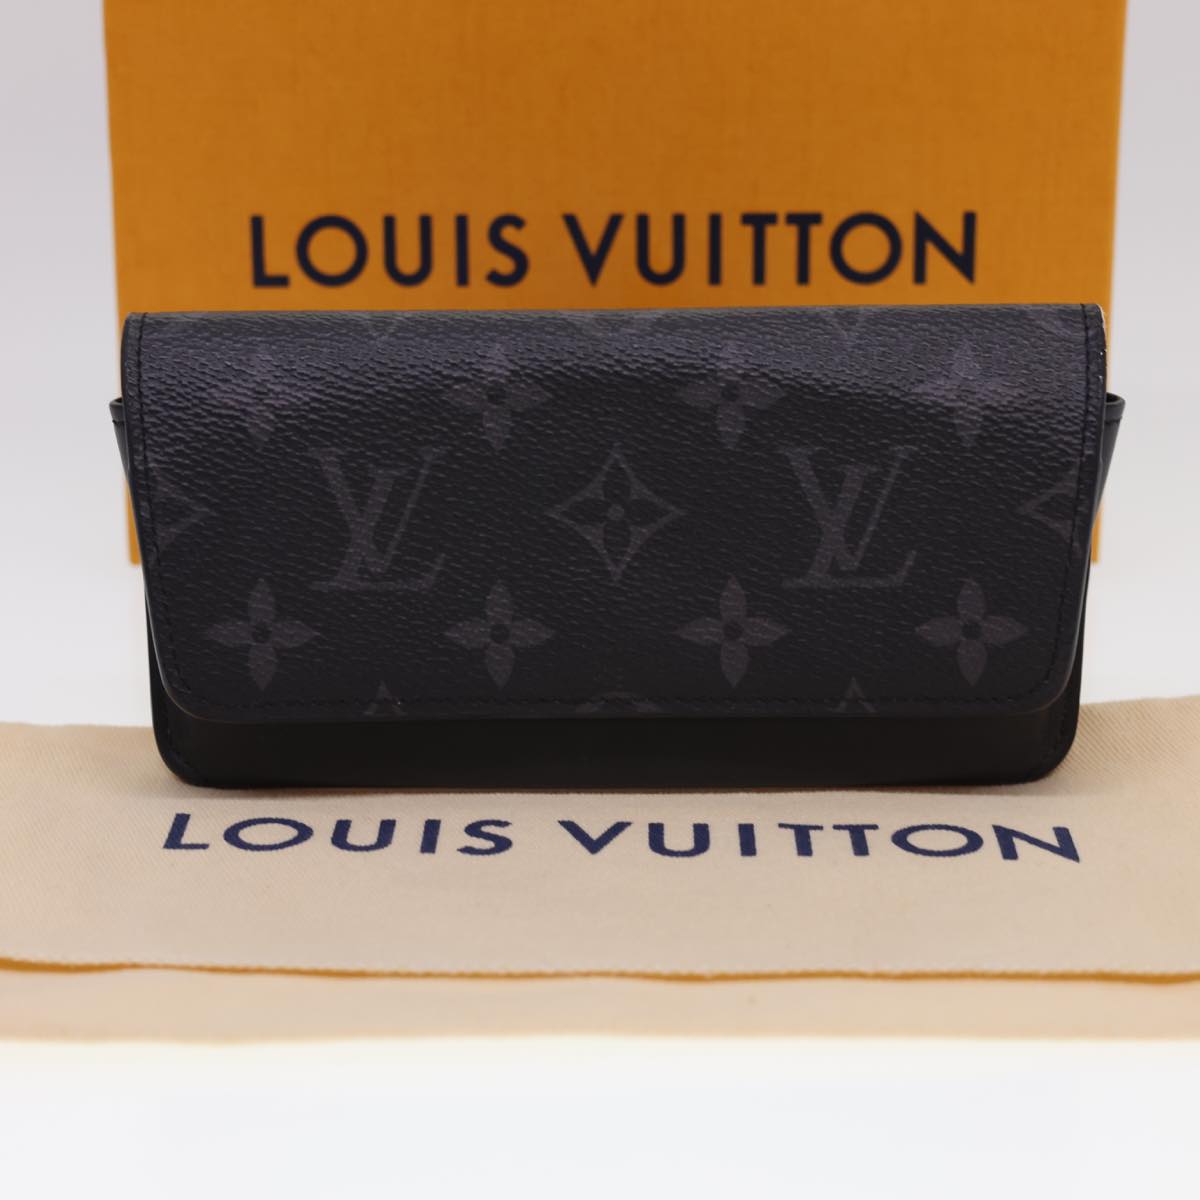 Shop Louis Vuitton MONOGRAM Woody glasses case (GI0296) by